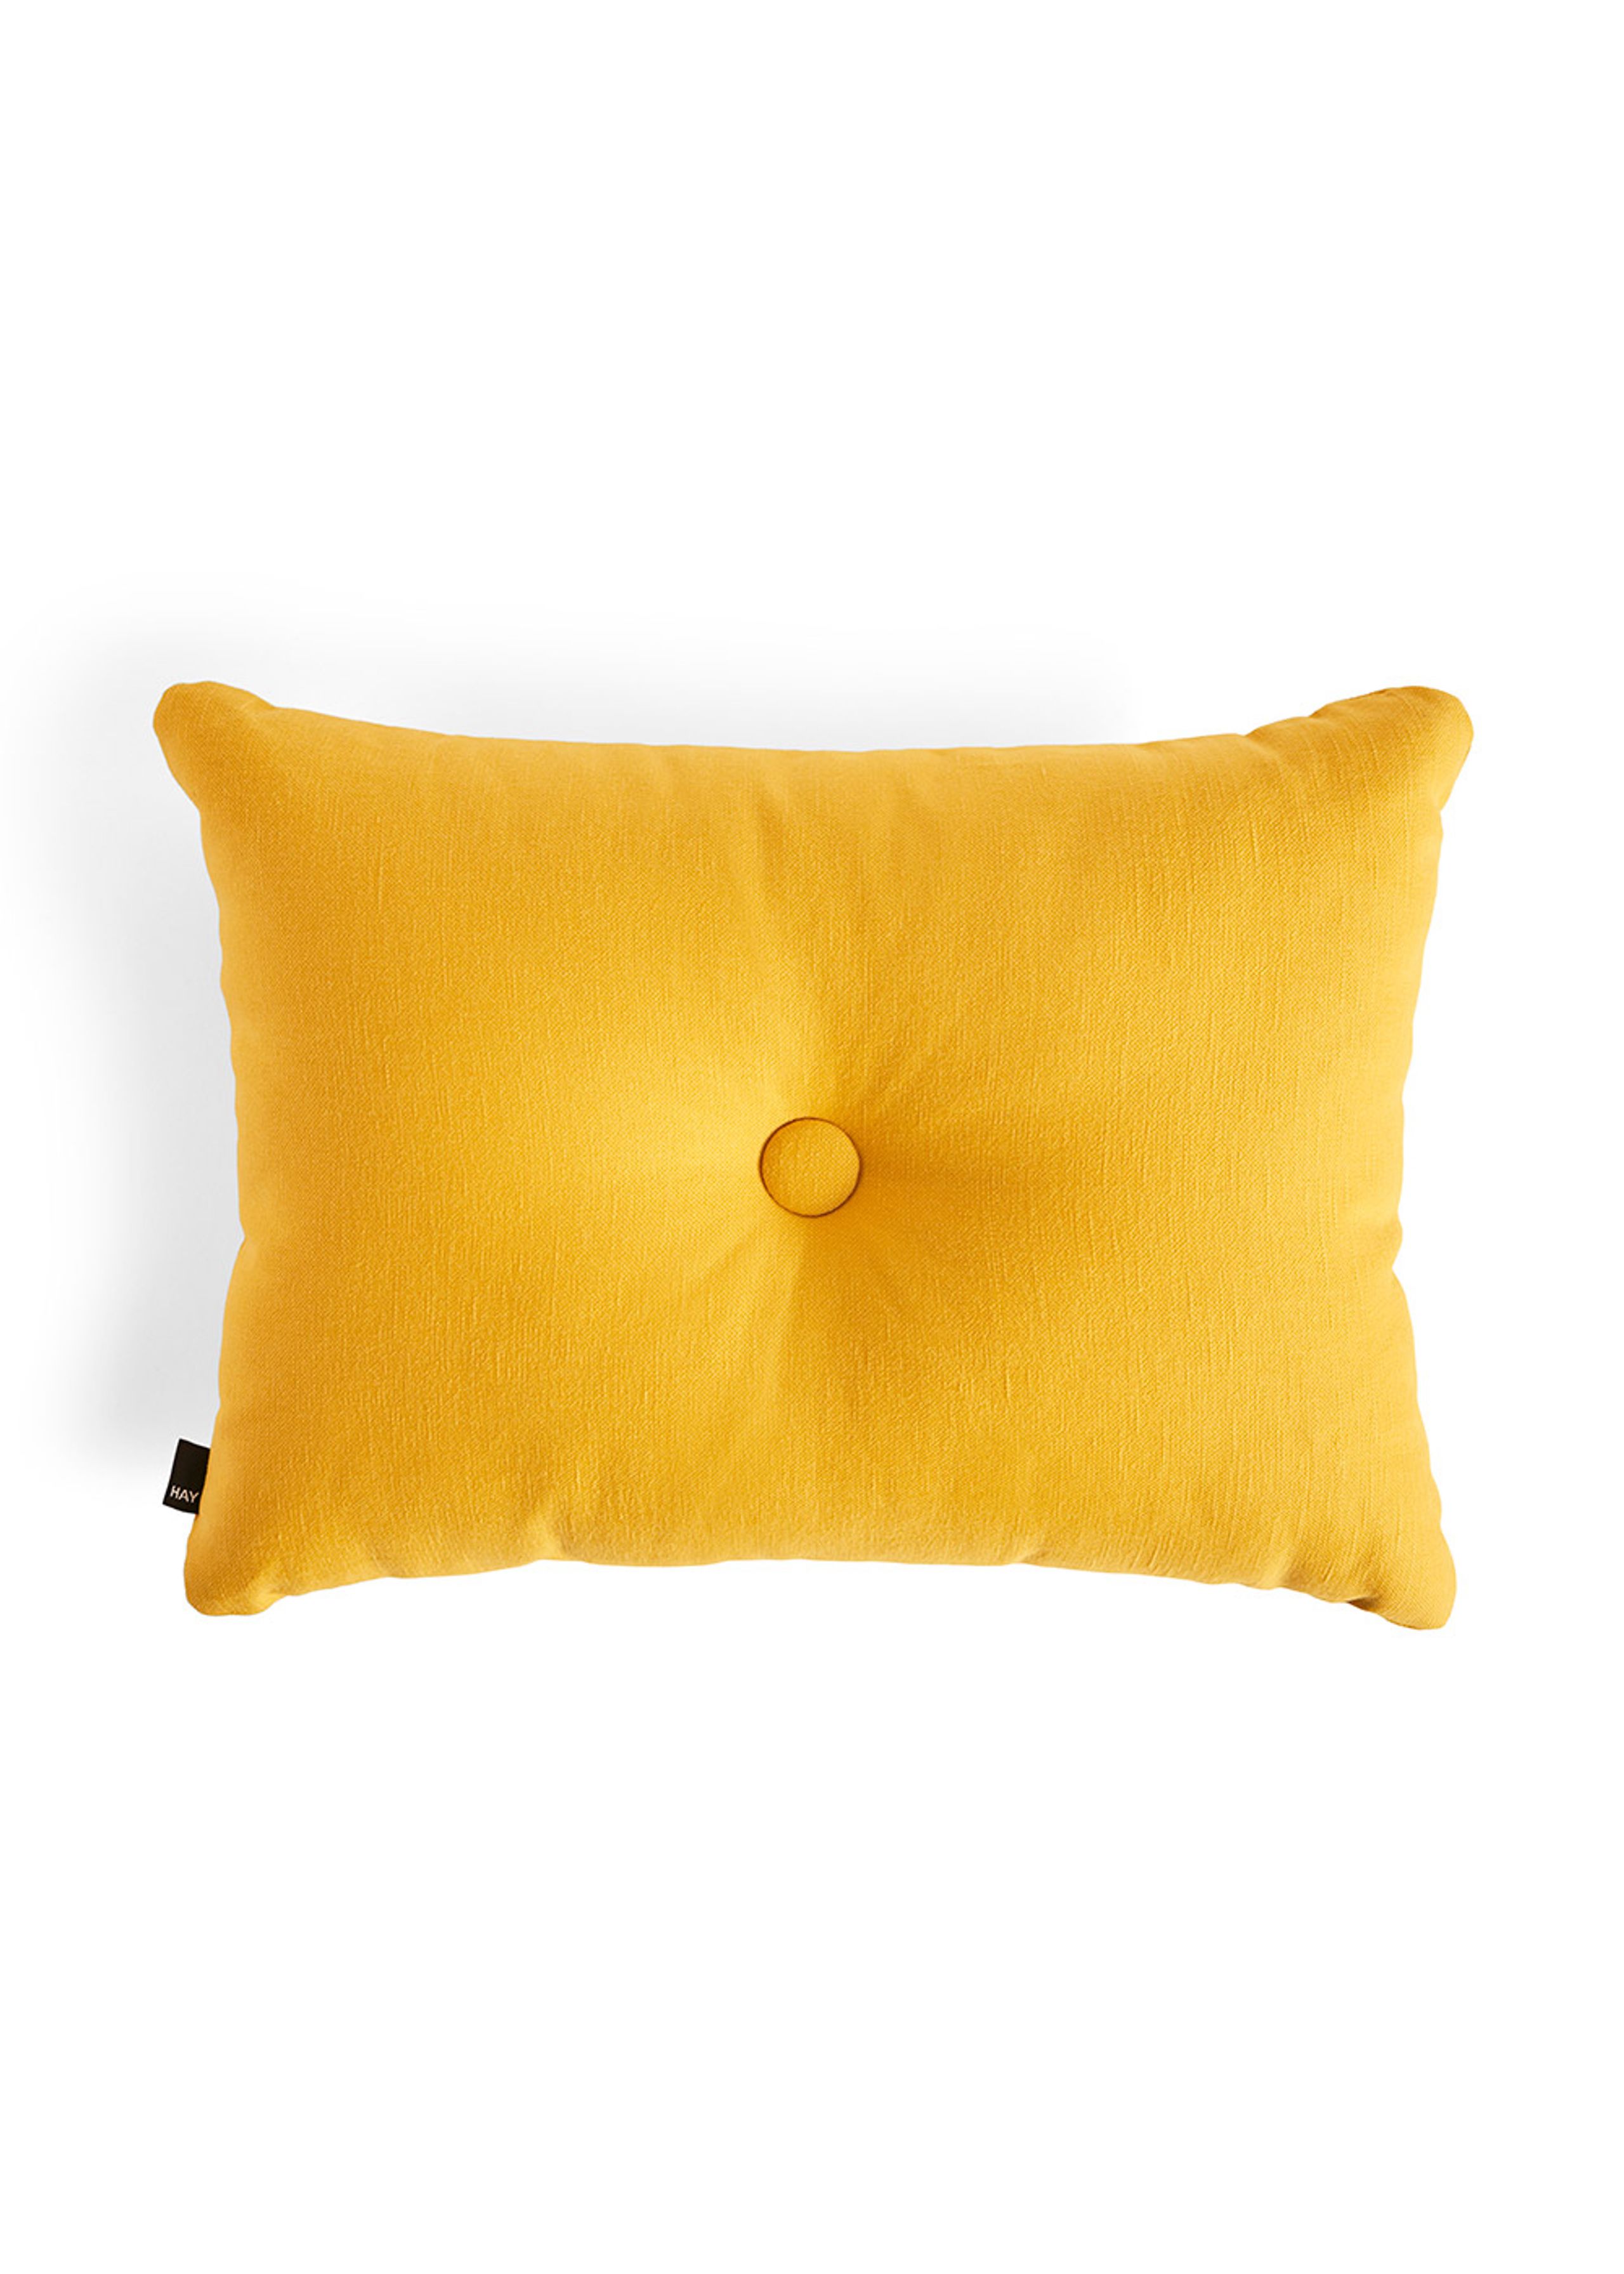 HAY - Pillow - DOT Cushion / Planar - Warm Yellow